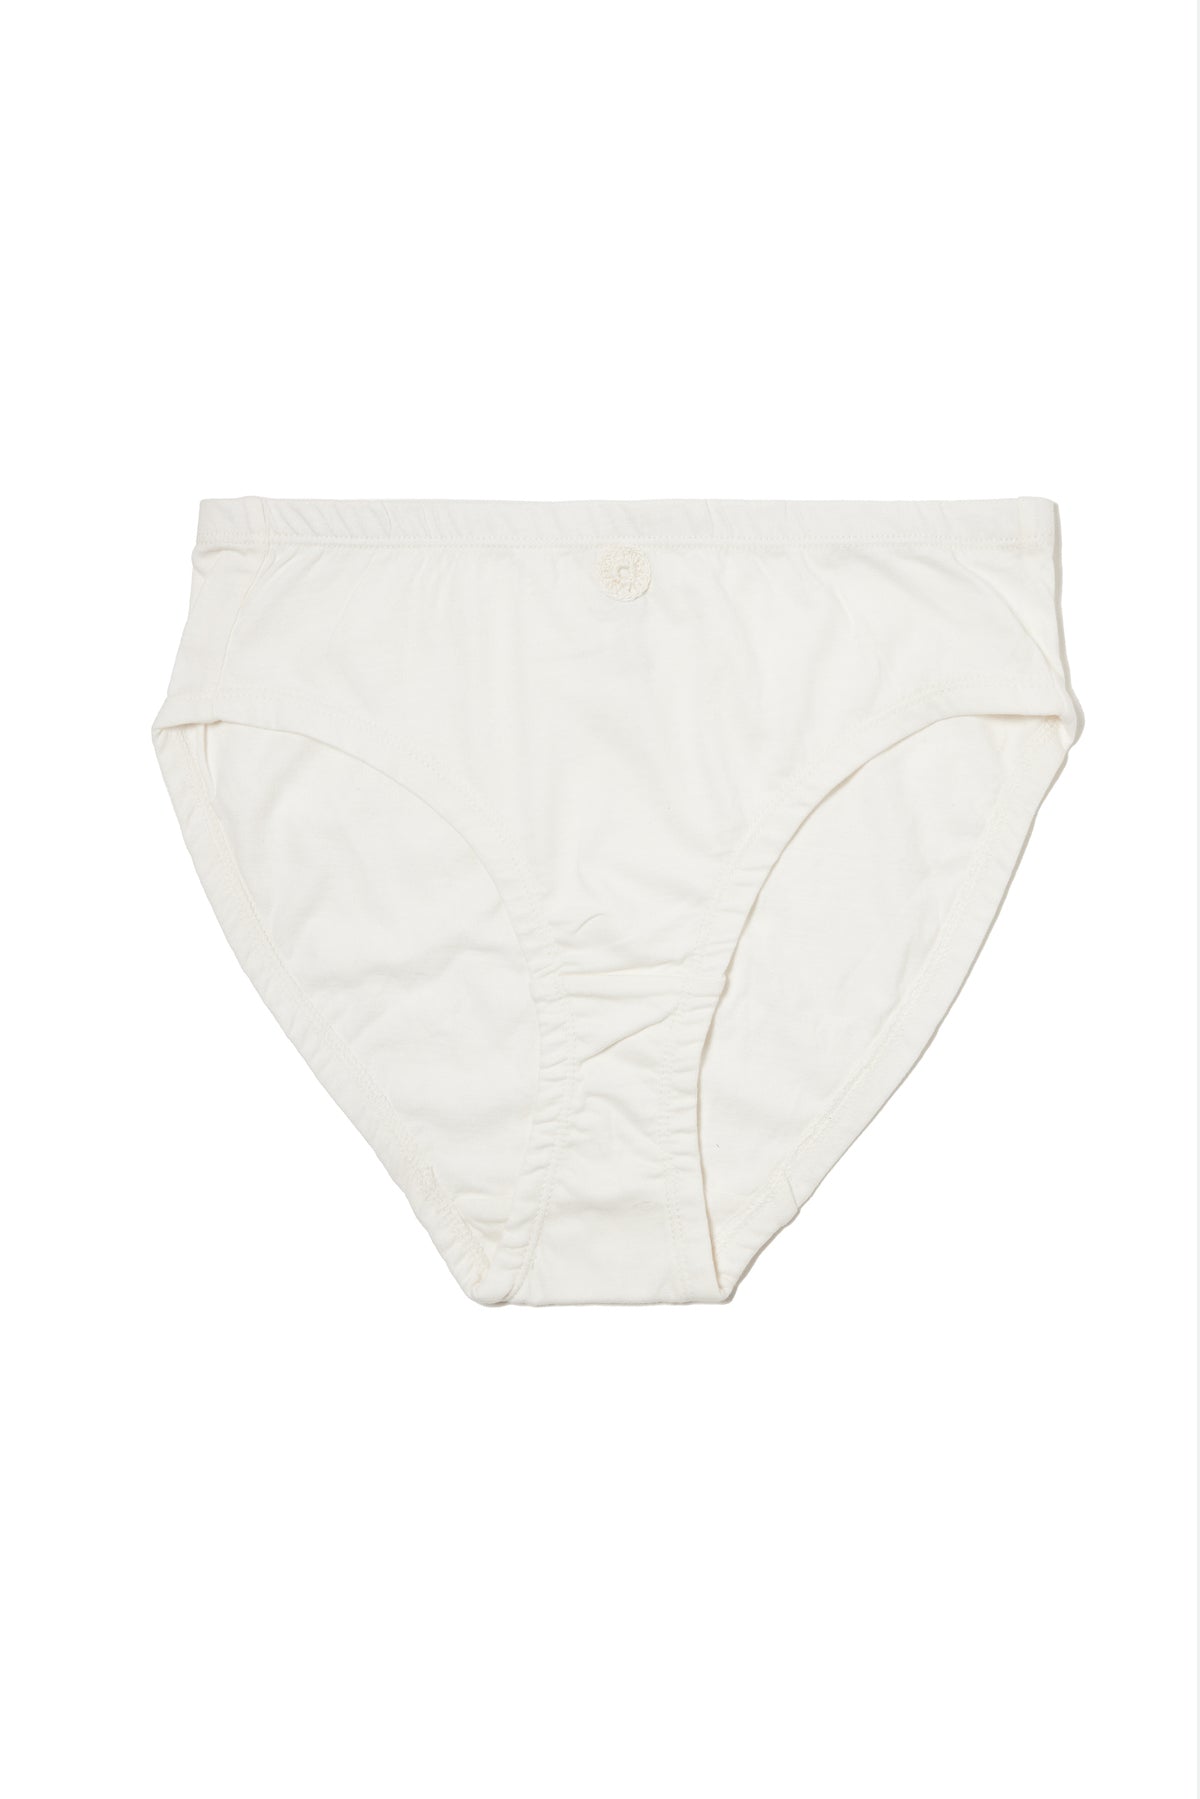 Buy Maayu Women's Cotton Hipster Underwear, Panty, Underpants